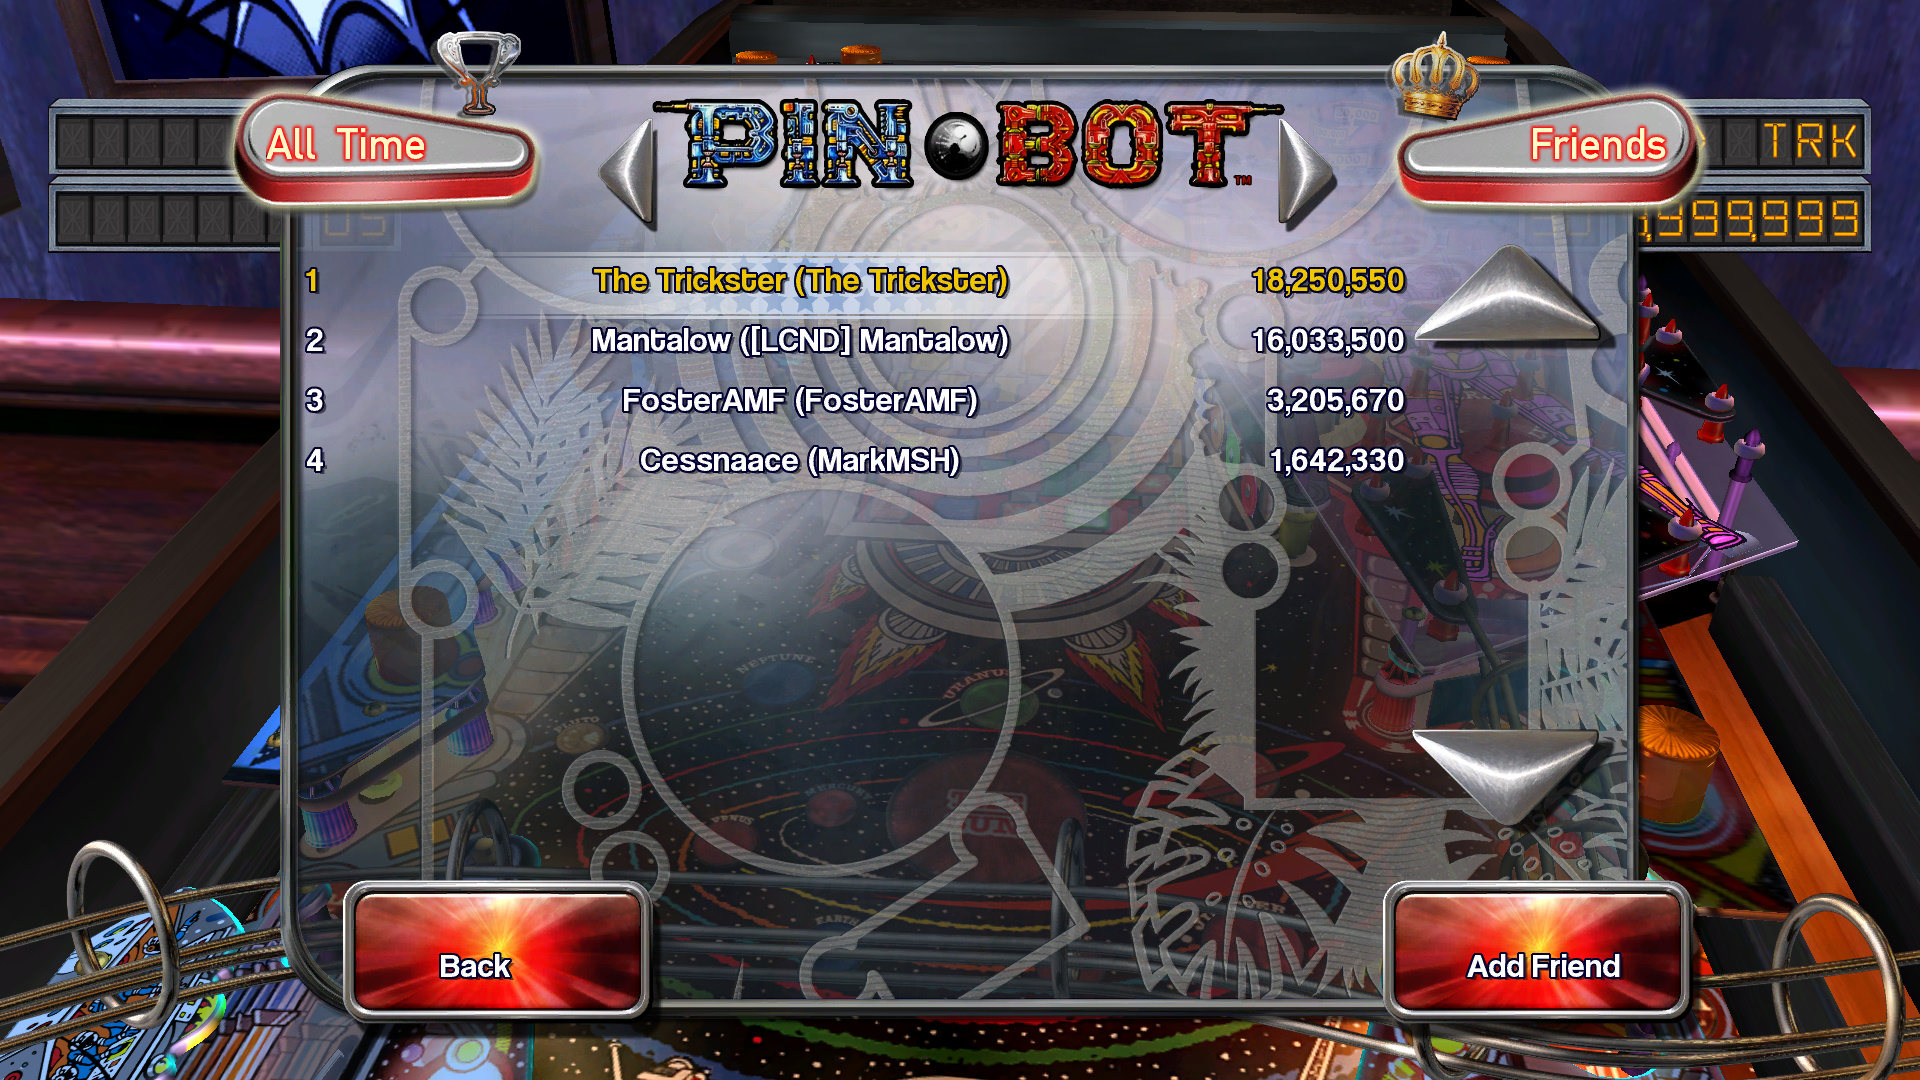 TheTrickster: Pinball Arcade: Pin*Bot (PC) 18,250,550 points on 2015-10-02 08:36:43